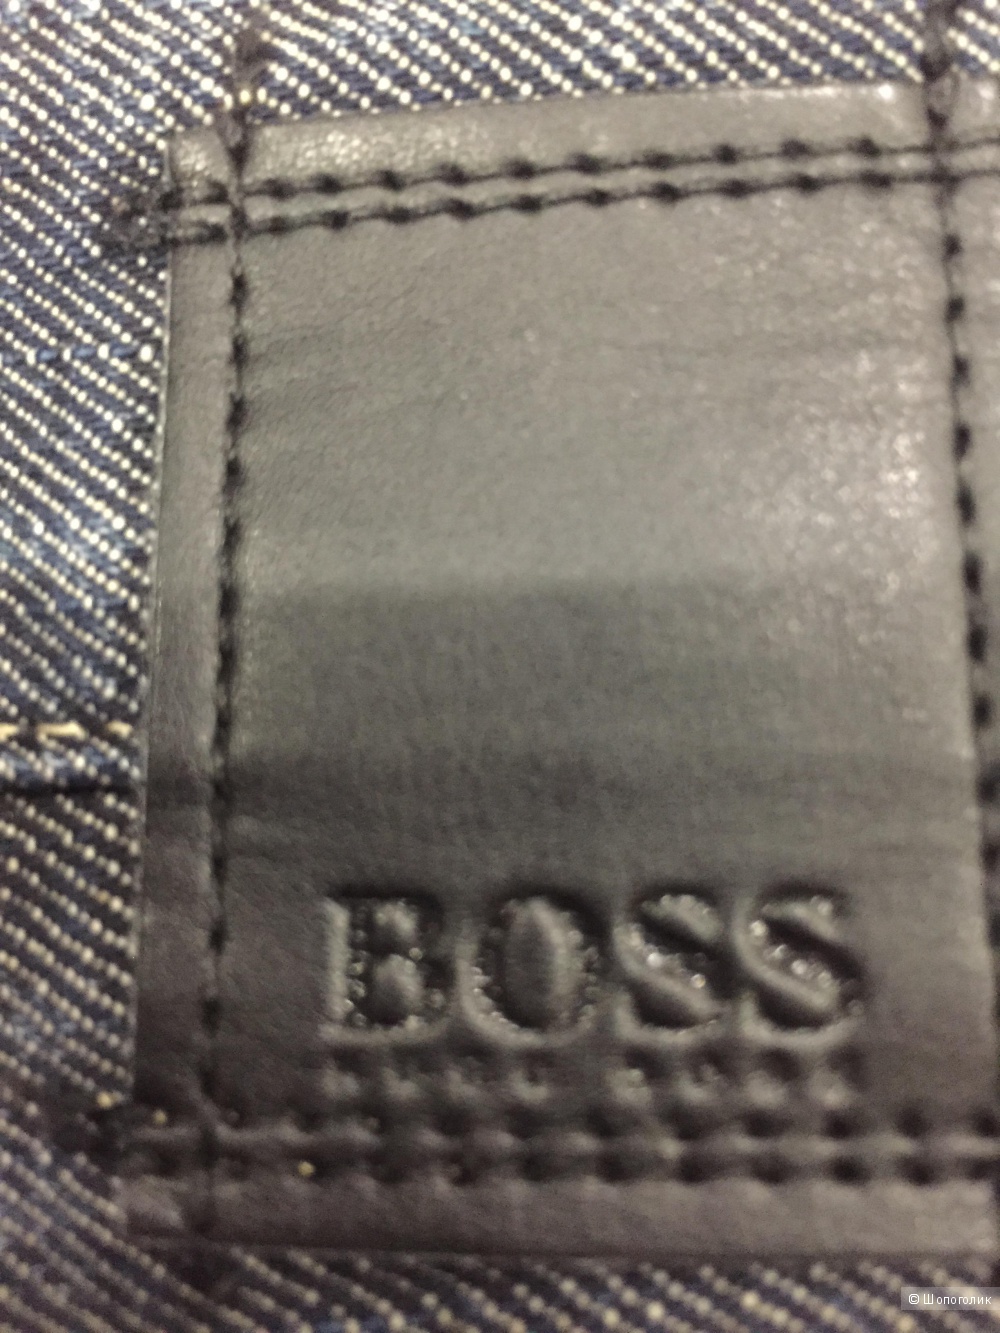 Мужские джинсы Hugo Boss размер XL